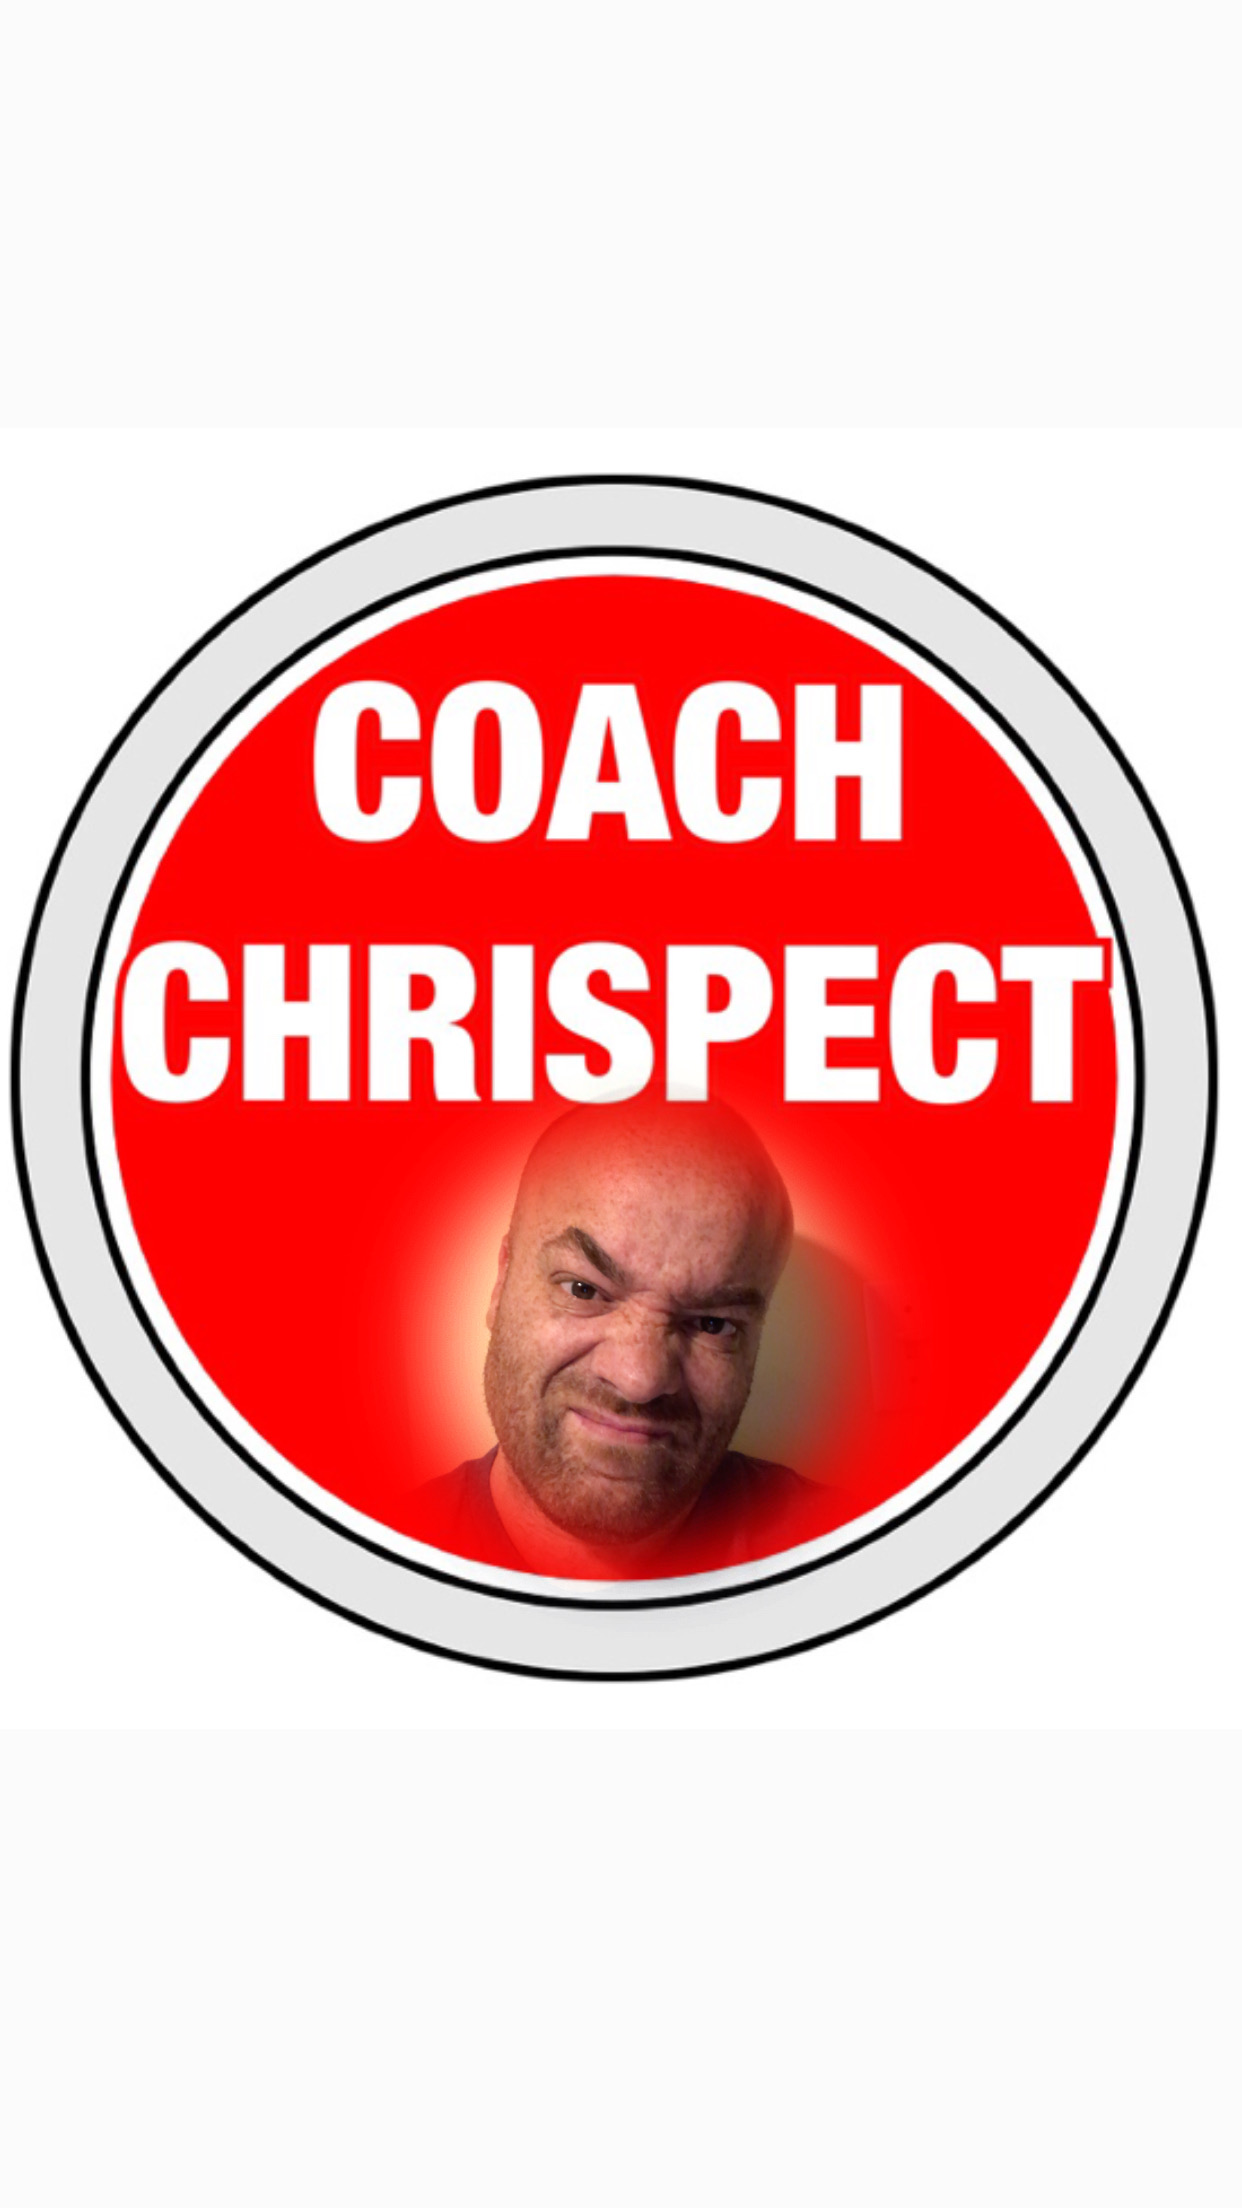 Coach Chrispect